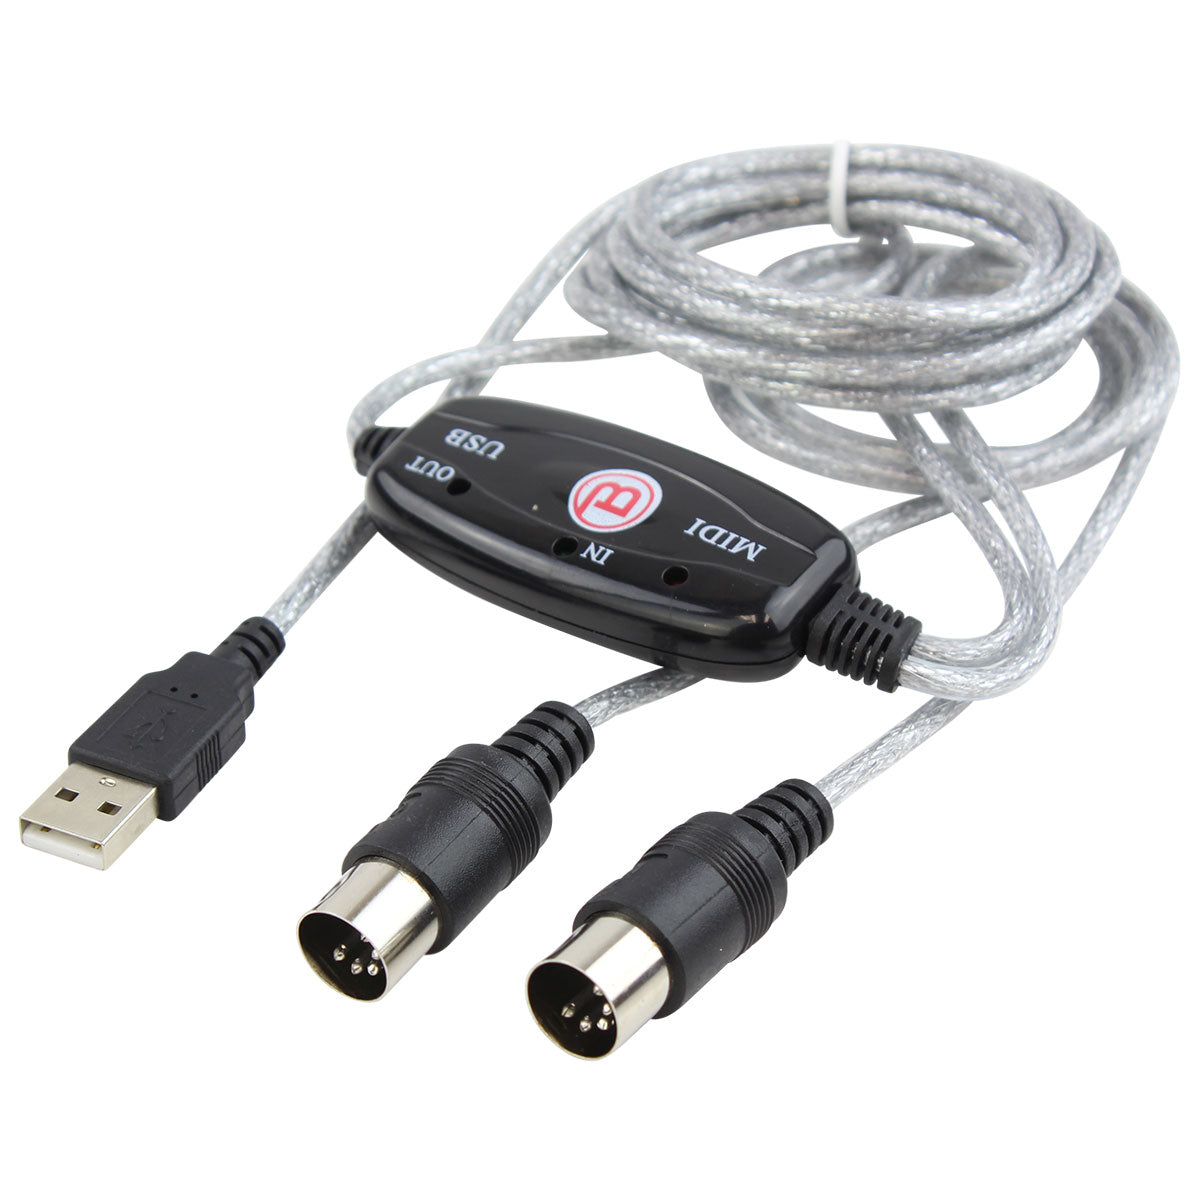 Blastking MIDI to USB Interface Cable – CMIDI-USB